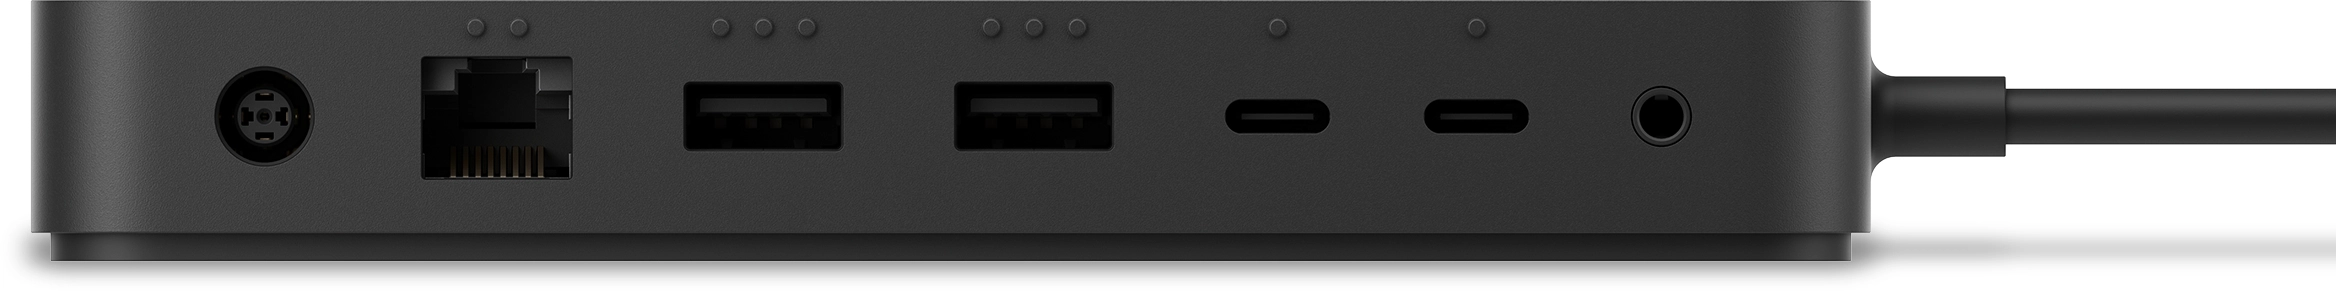 Microsoft Surface Thunderbolt 4 Dock - Kabelgebunden - Thunderbolt 4 - 2500 Mbit/s - Schwarz - Kensington - Microsoft